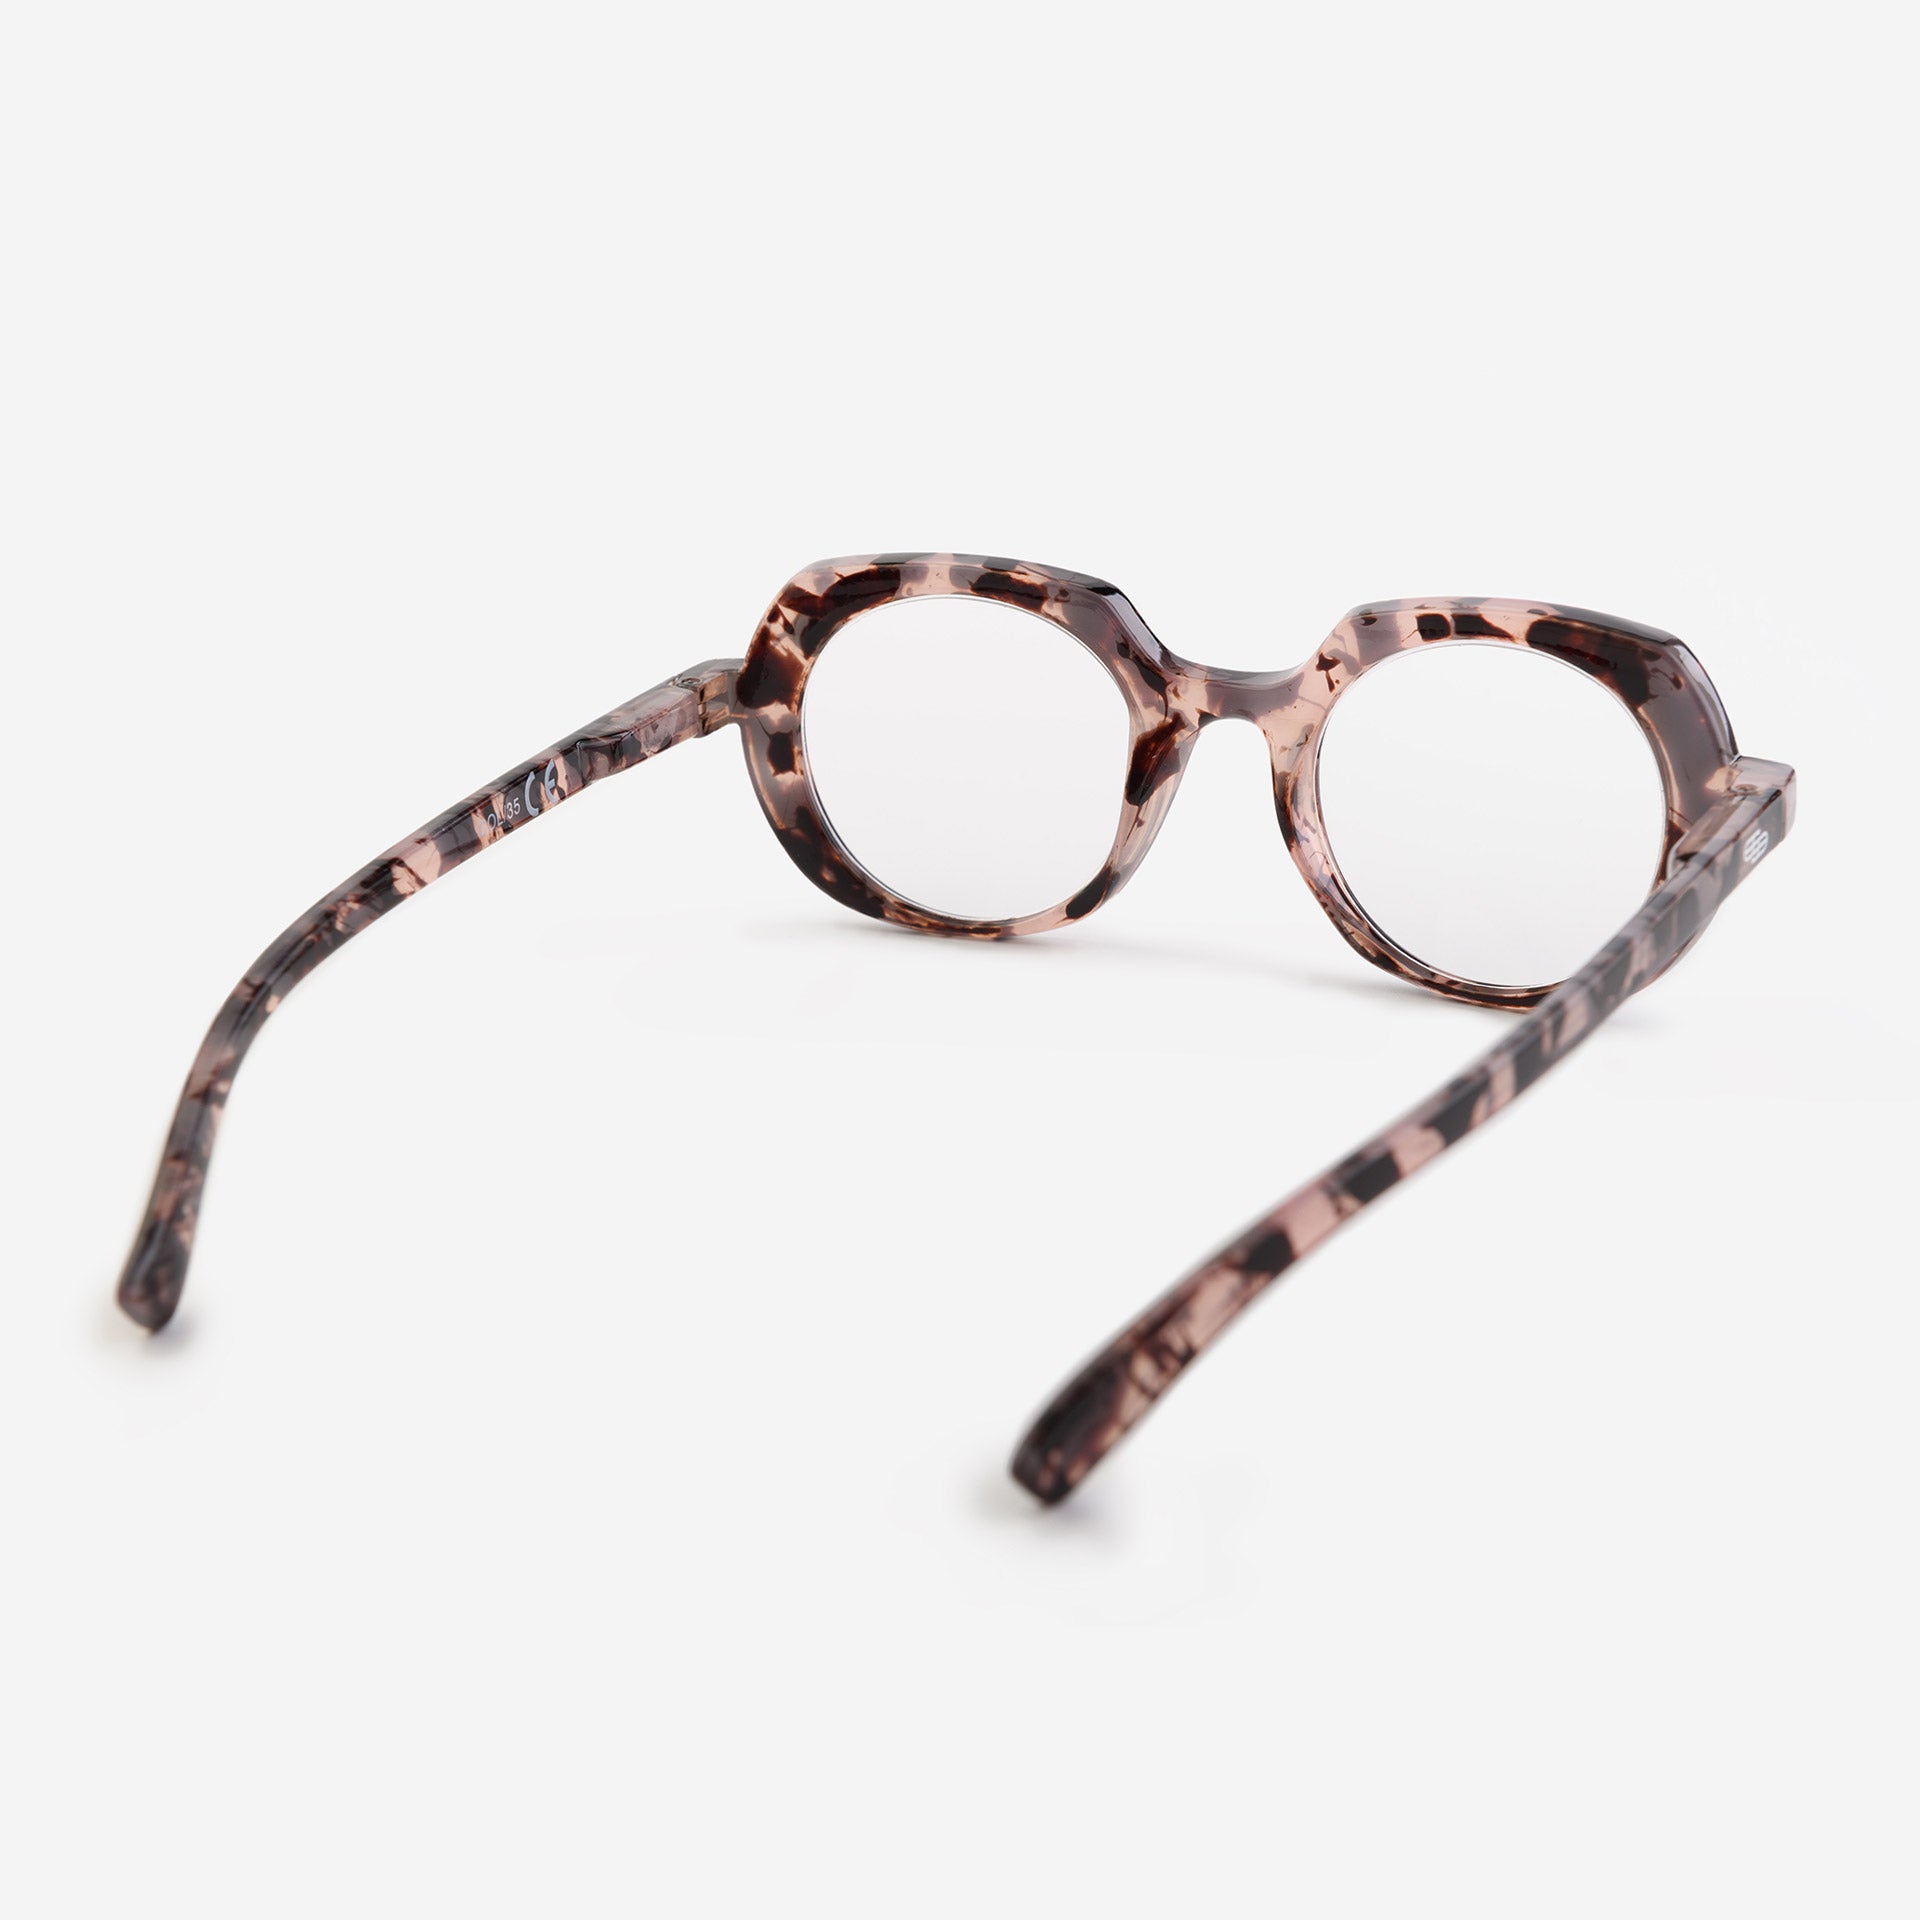 Round reading glasses - pink tortoiseshell pattern